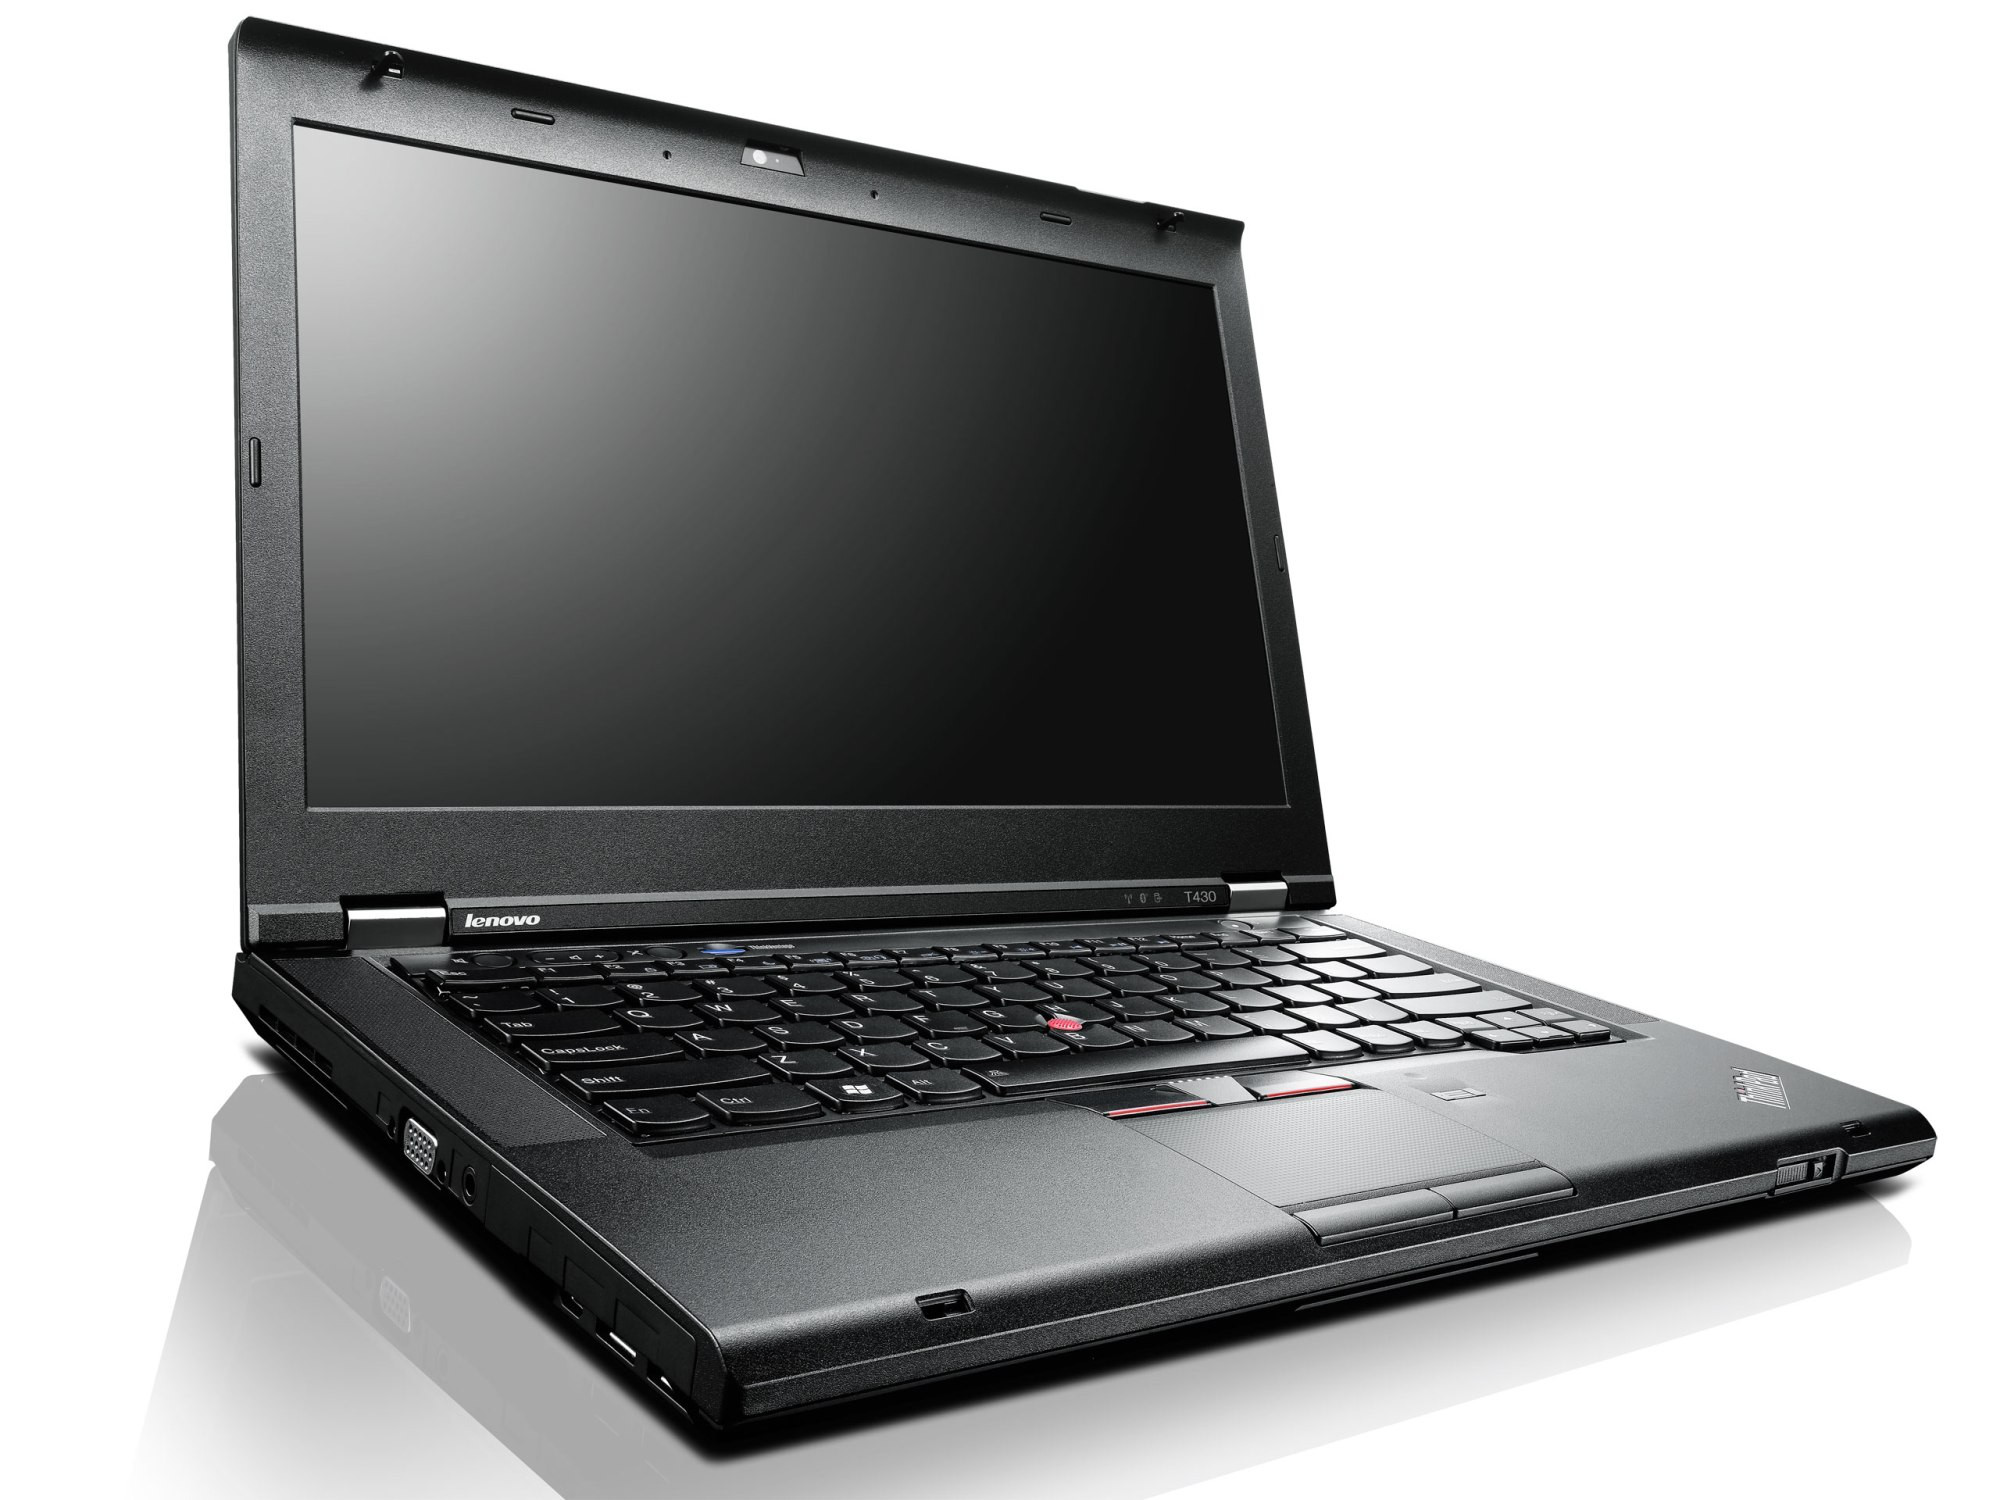  Lenovo  Thinkpad  T430  Laptopid ee